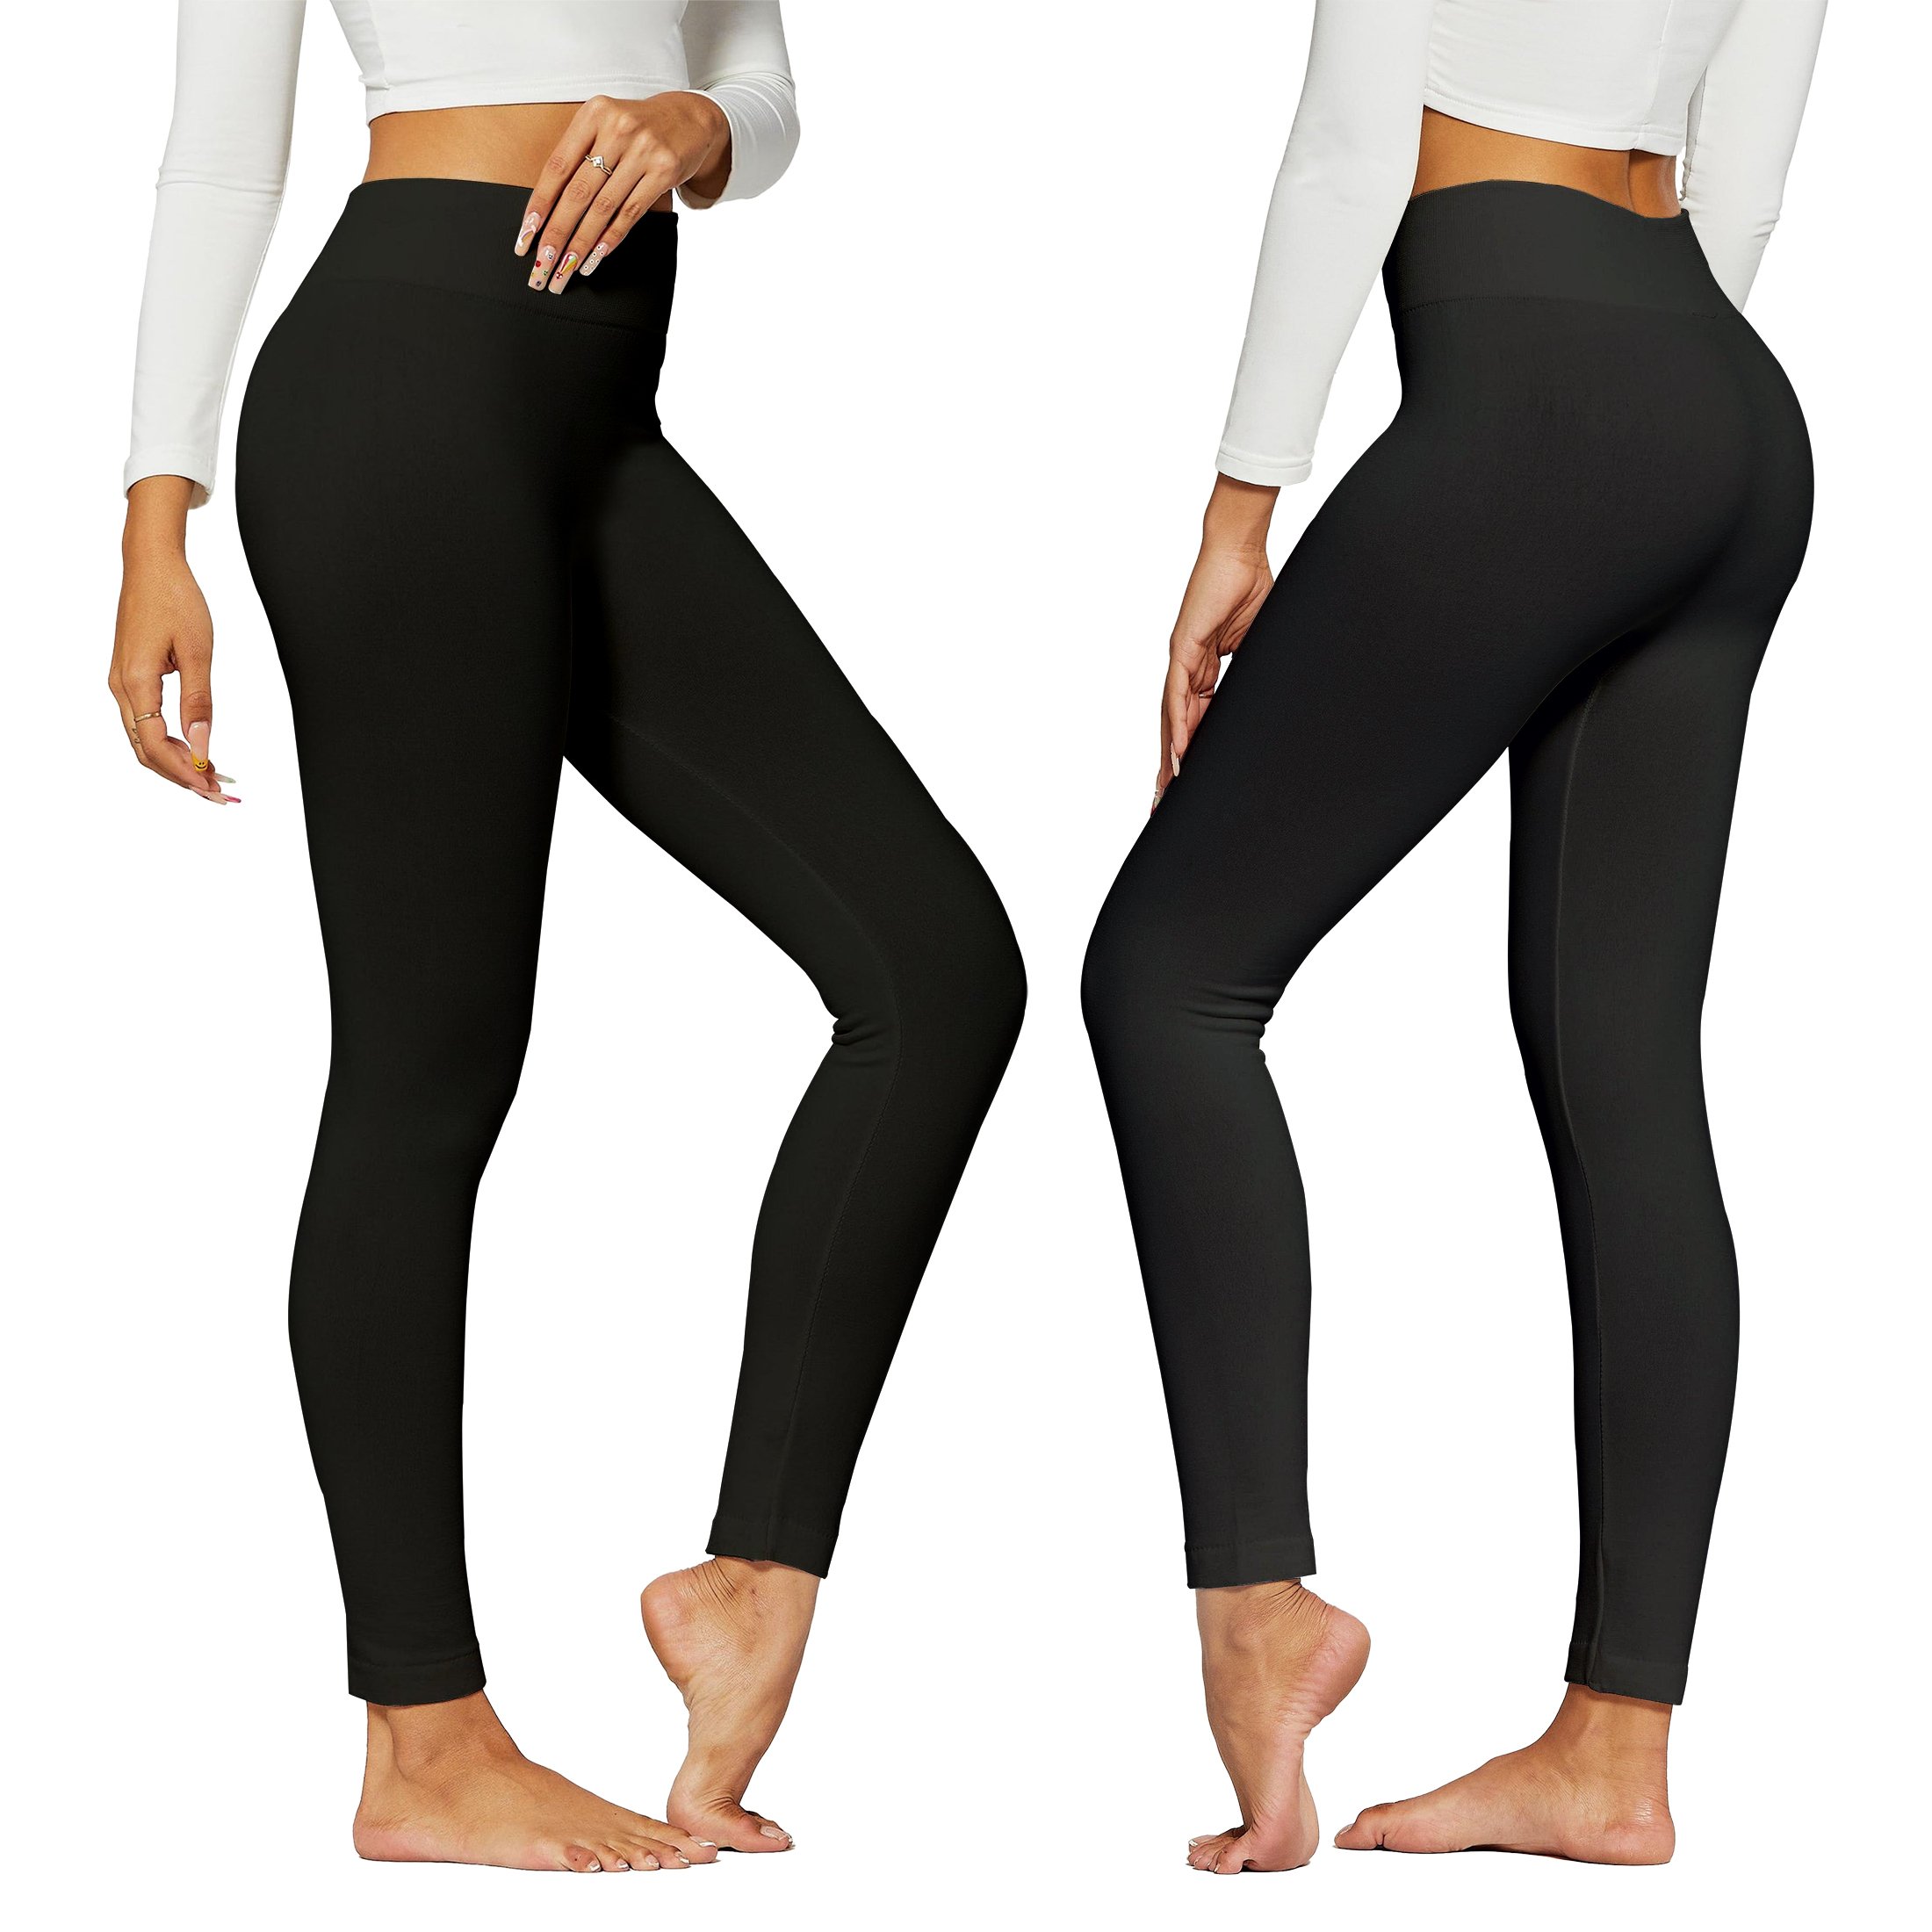 Women's Premium Quality High-Waist Fleece Lined Leggings (Plus Size Available) - Gray, 1X/2X